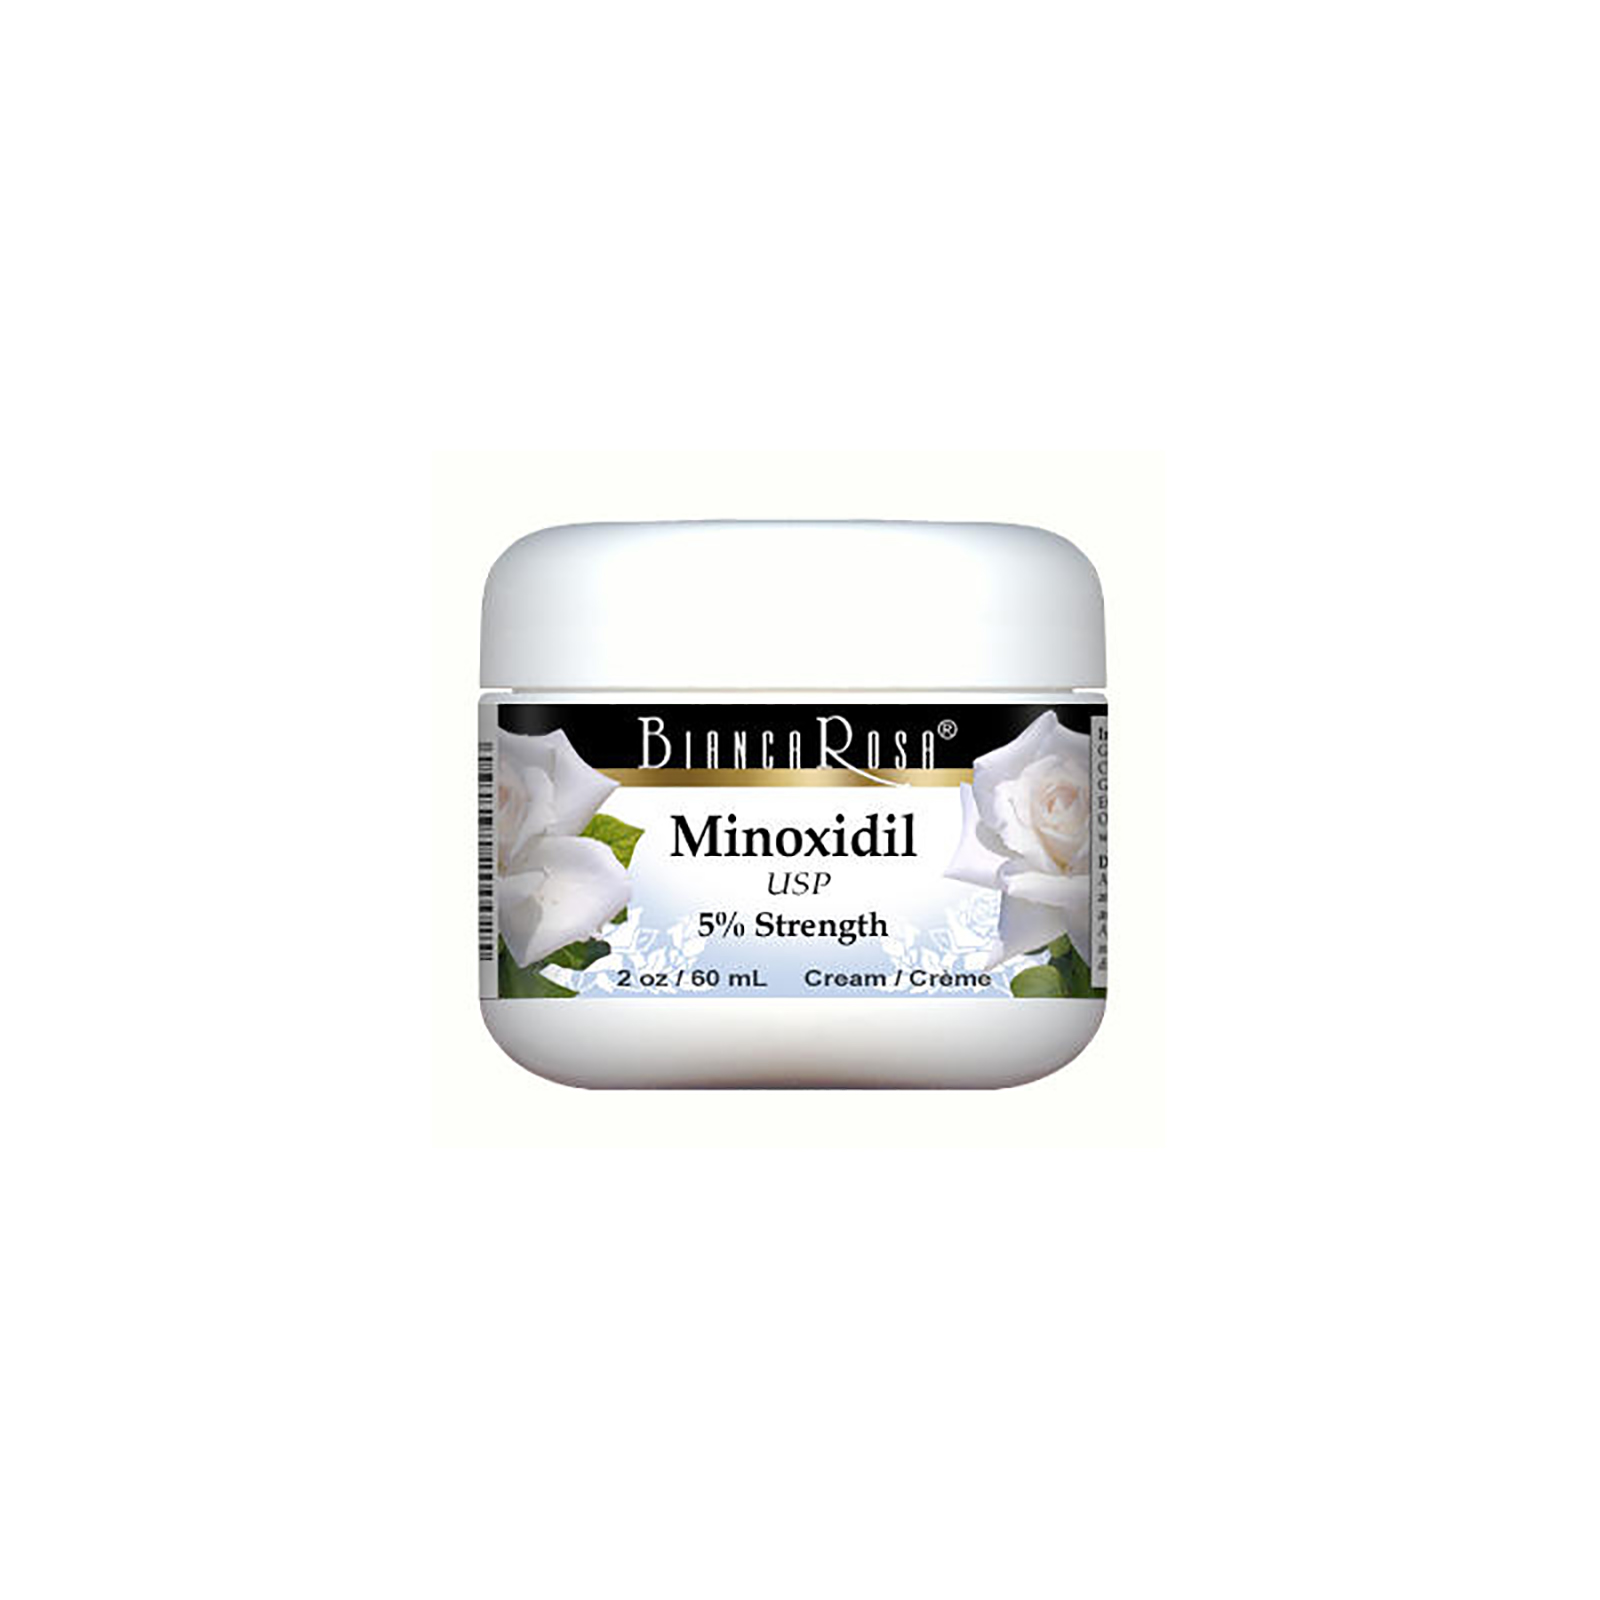 Bianca Rosa 2oz. 5% Minoxidil USP Cream